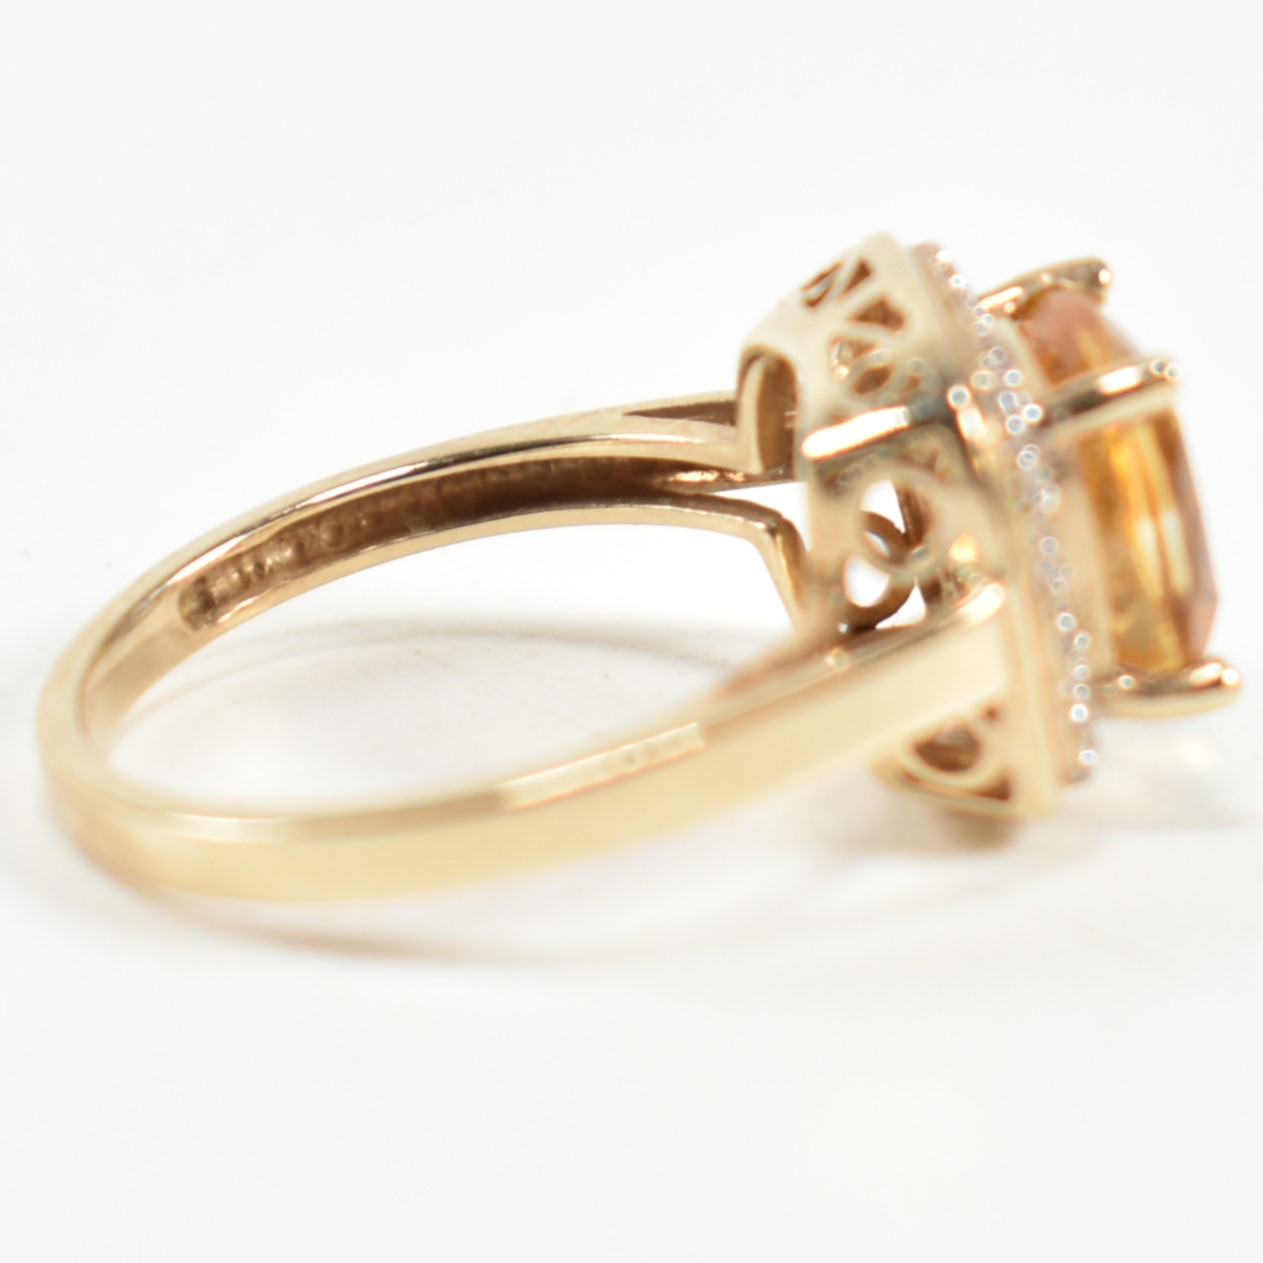 HALLMARKED 9CT GOLD CITRINE & DIAMOND RING - Image 5 of 9